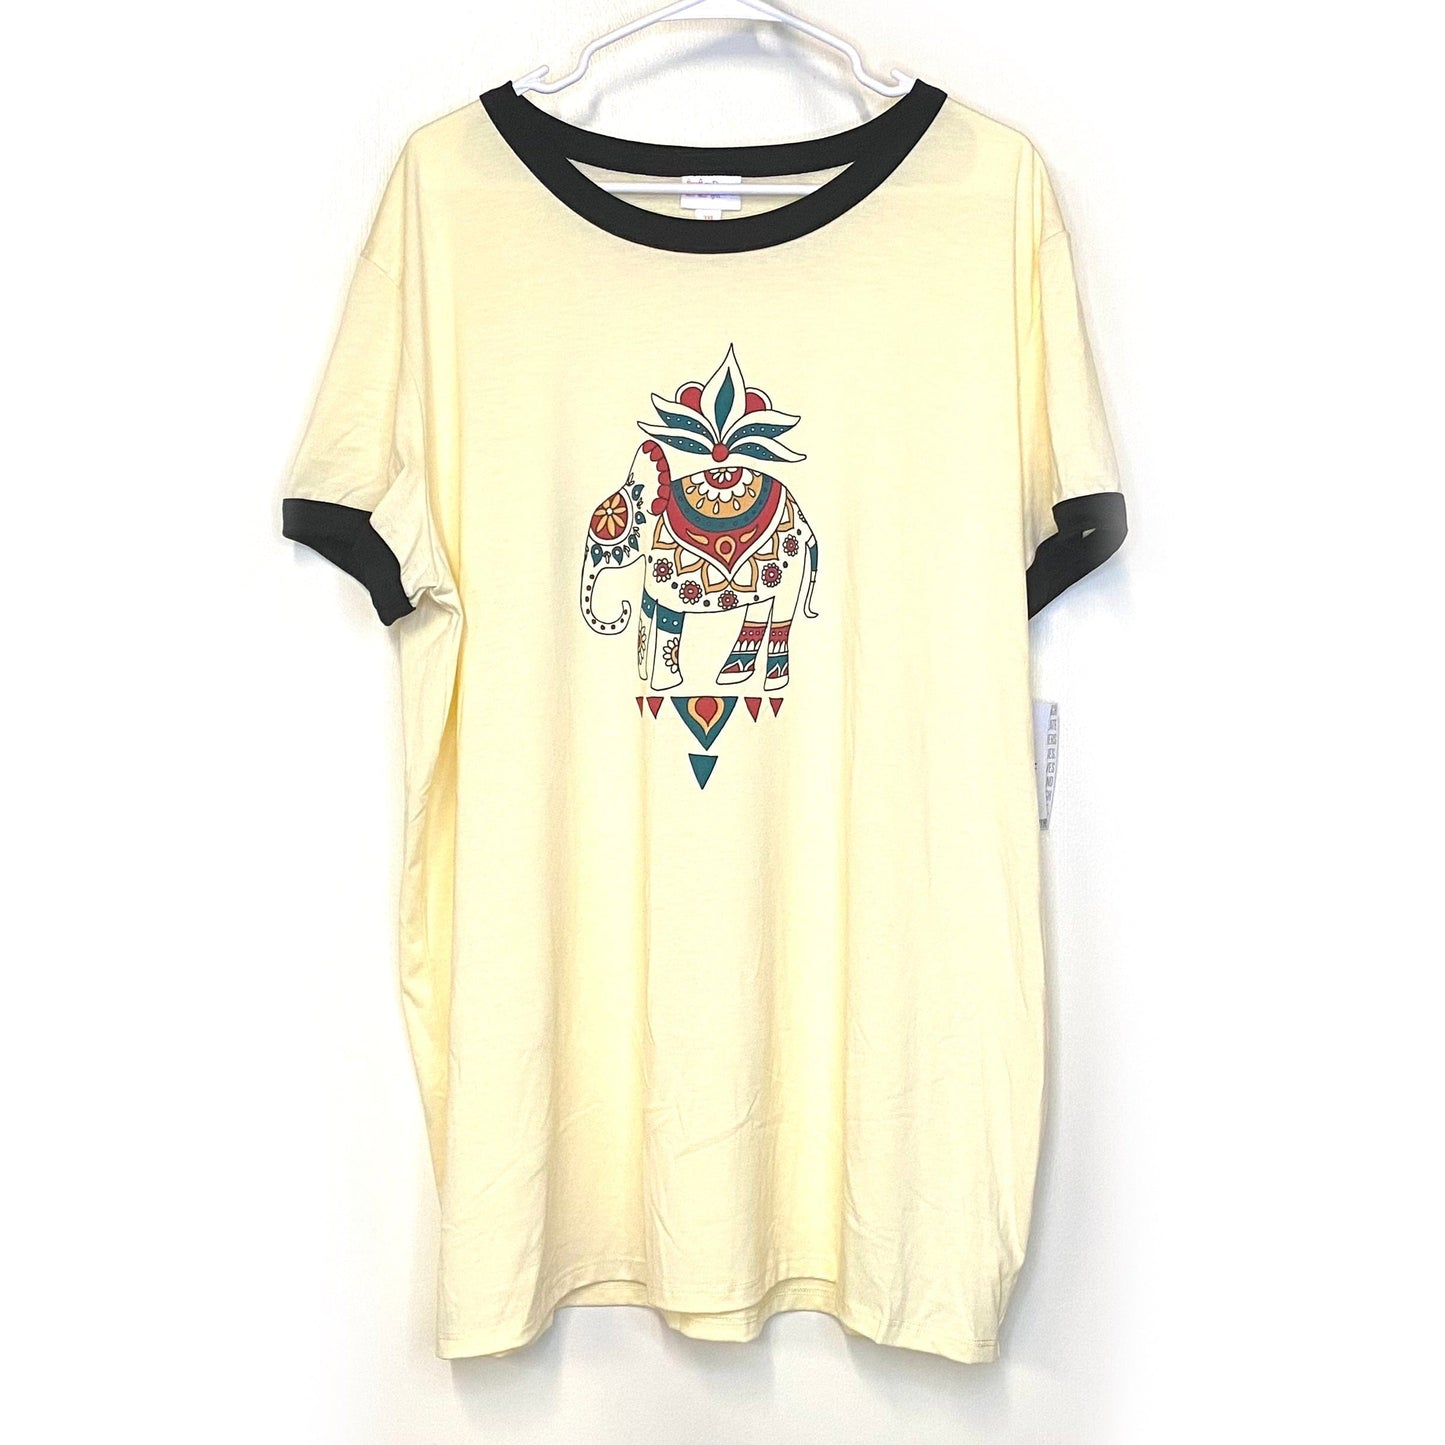 LuLaRoe Womens Size 3XL Elephant Yellow/Black Liv Graphic T-Shirt Shirt Cap Sleeves NWT